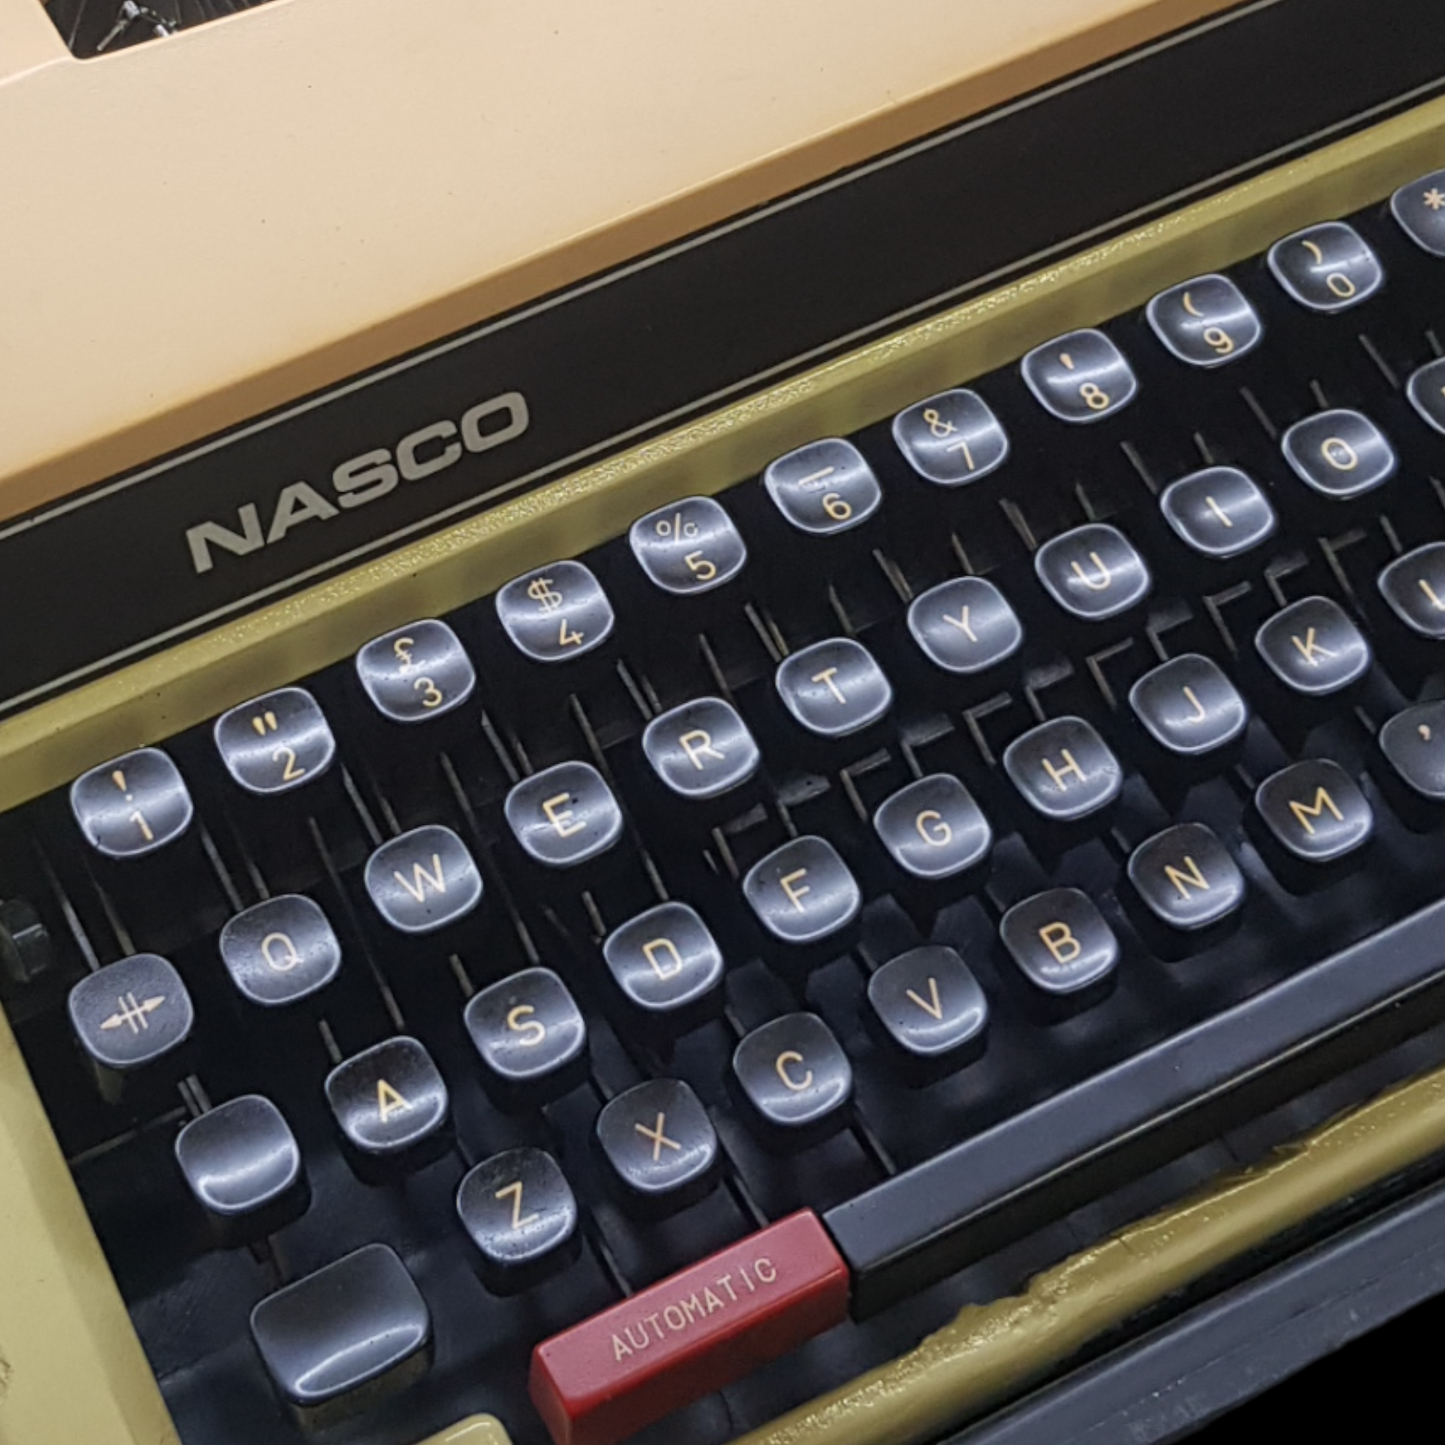 Image of Nasco 12 Typewriter. A Big Portable typewriter. Fibre Body. Available from Universal Typewriter Company.